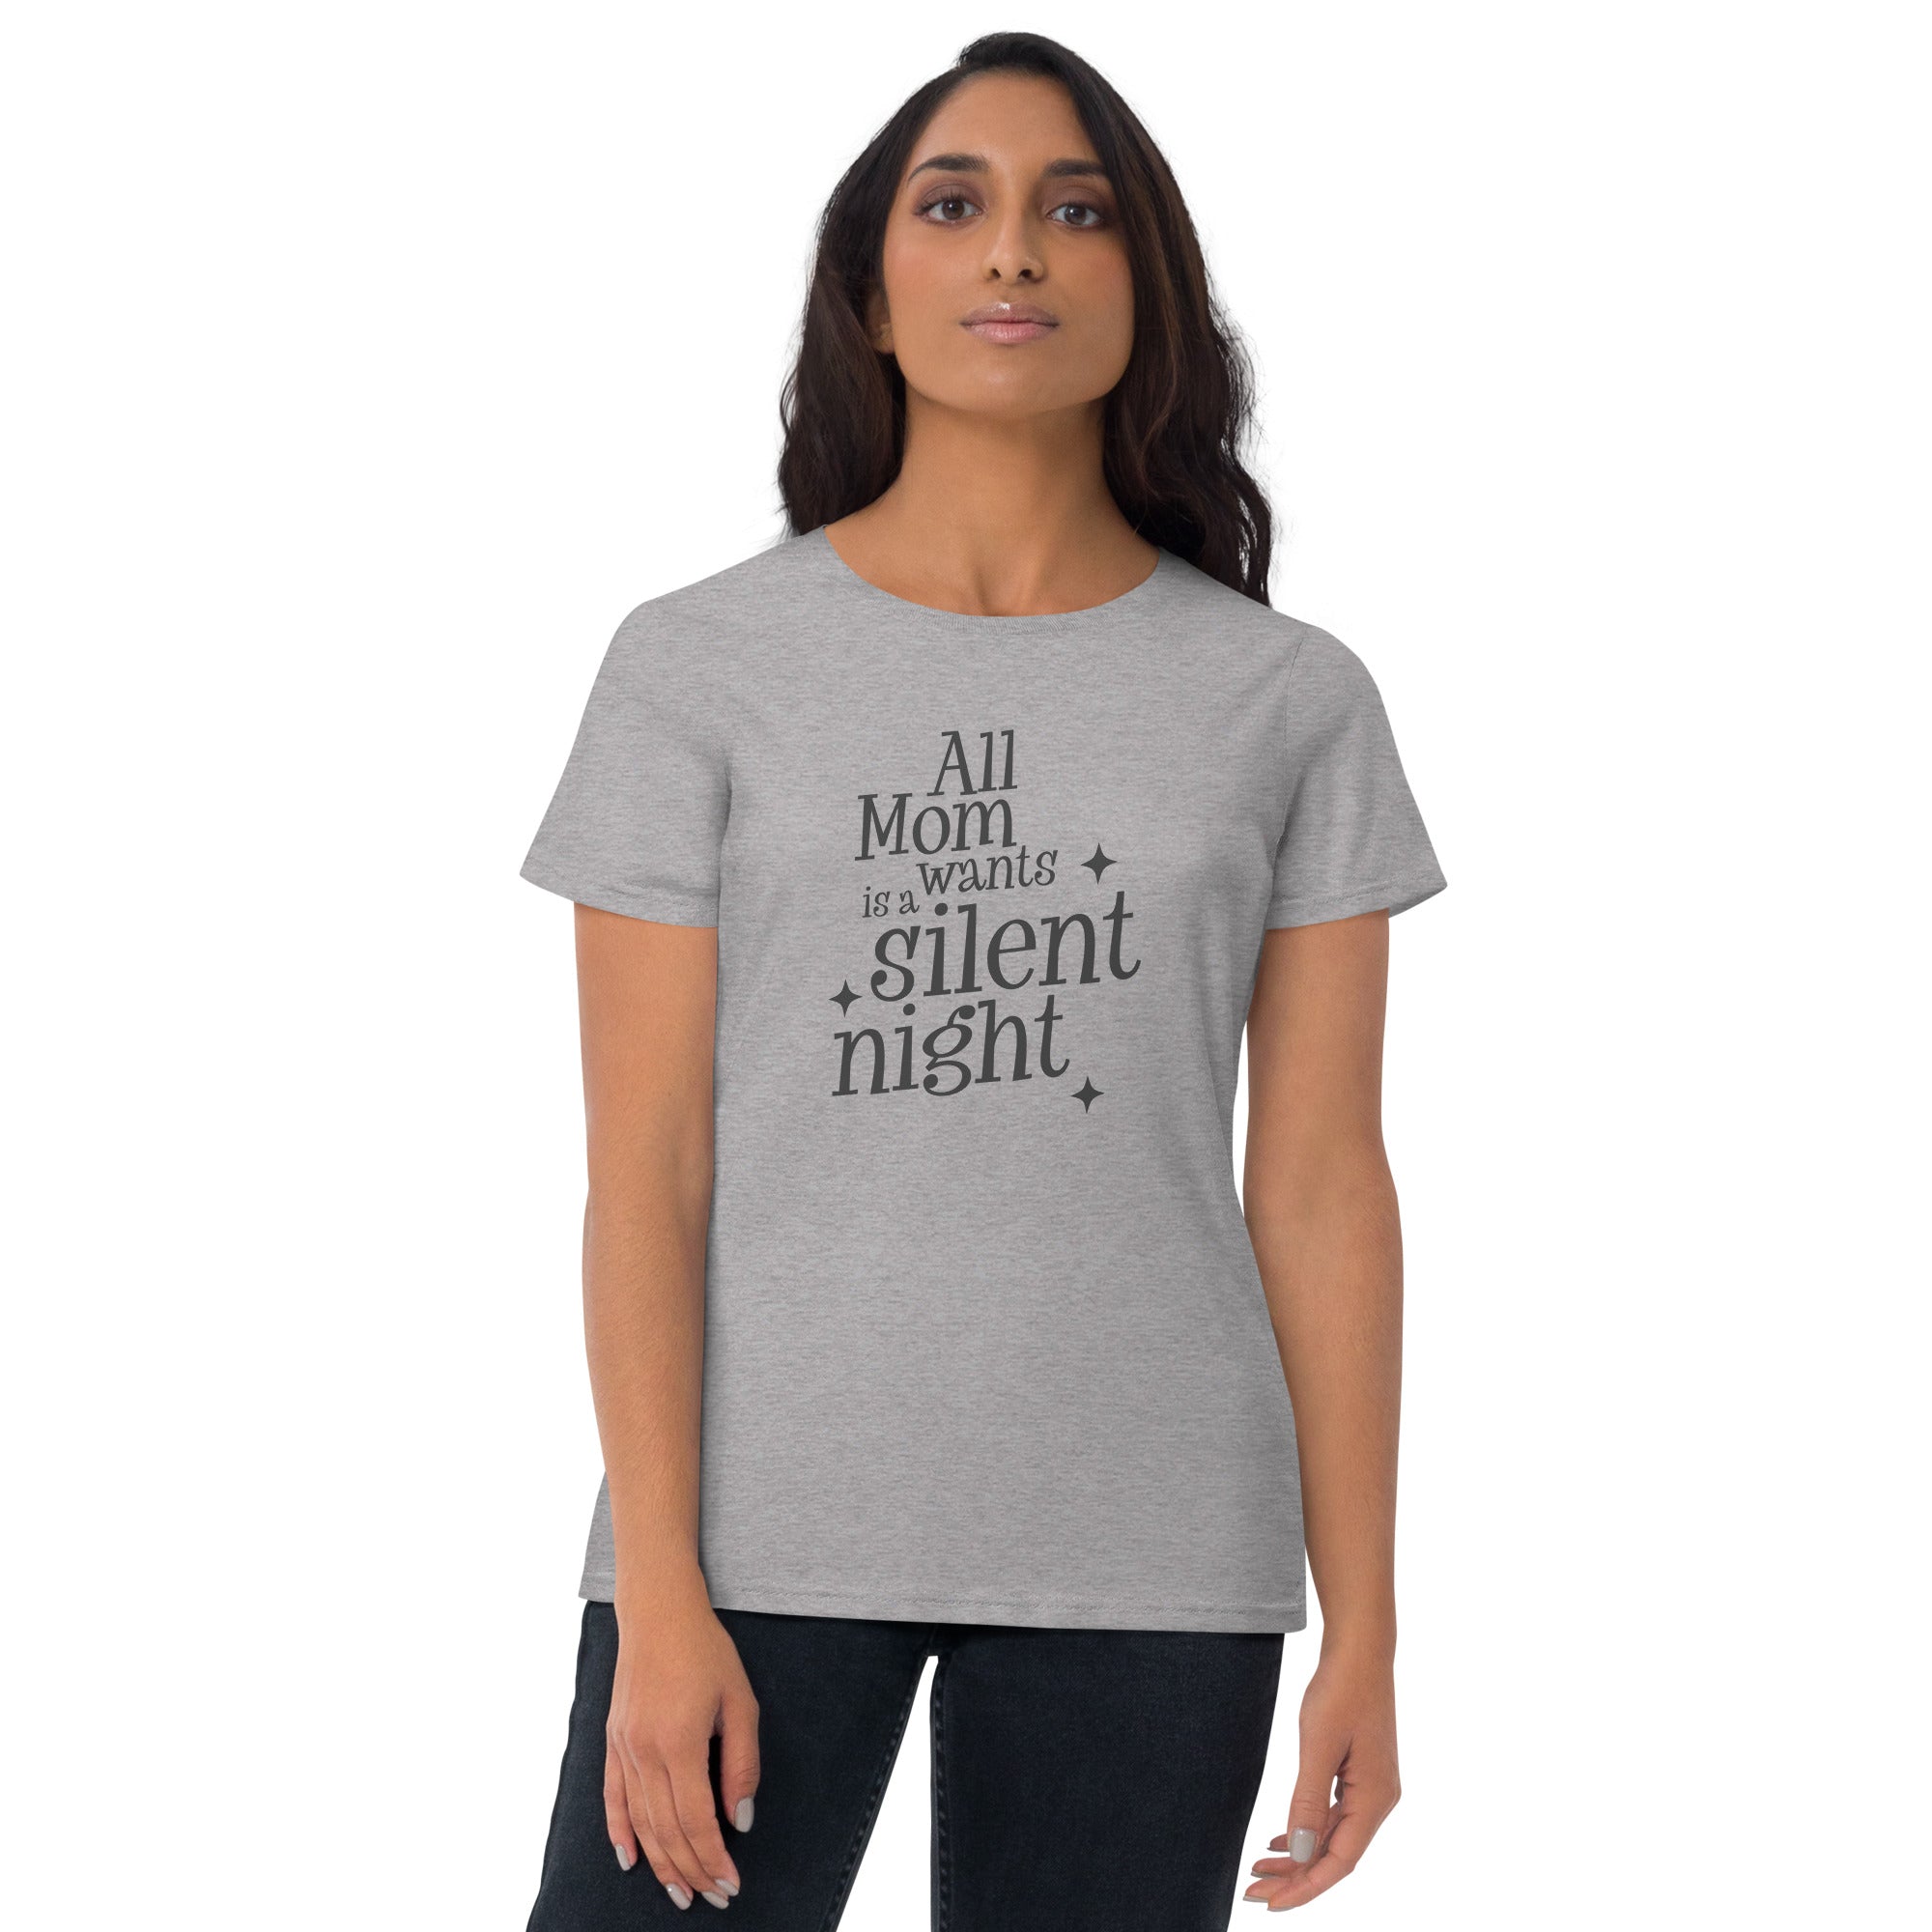 All Mom Wants Is A Silent Night - Women's short sleeve t-shirt